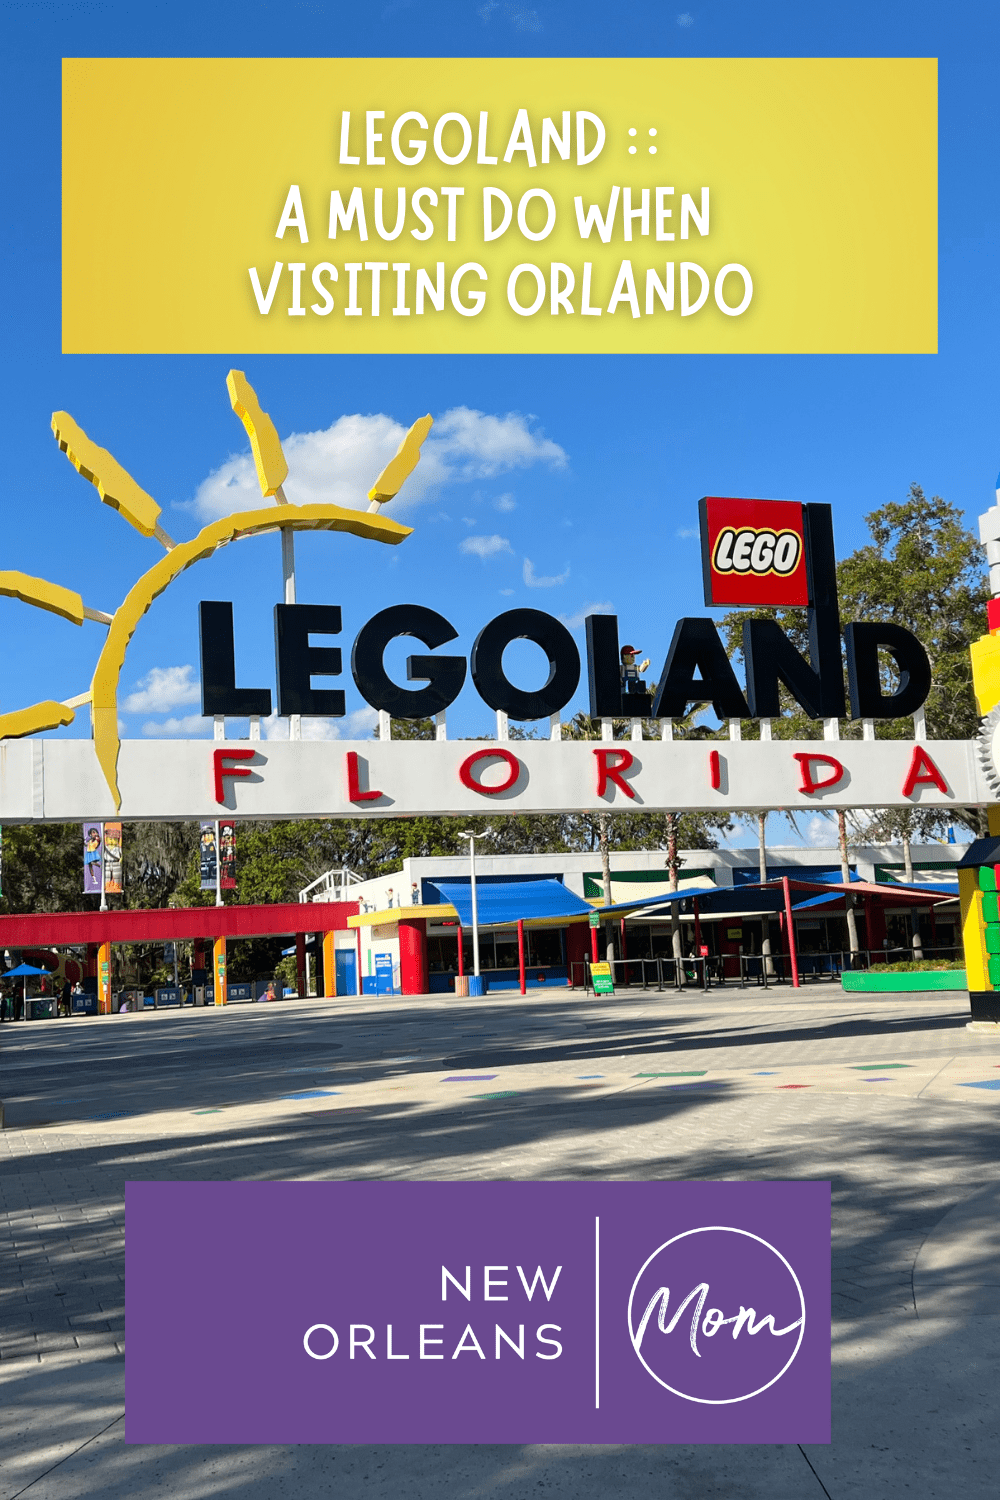 Why You Should Visit Legoland in Orlando